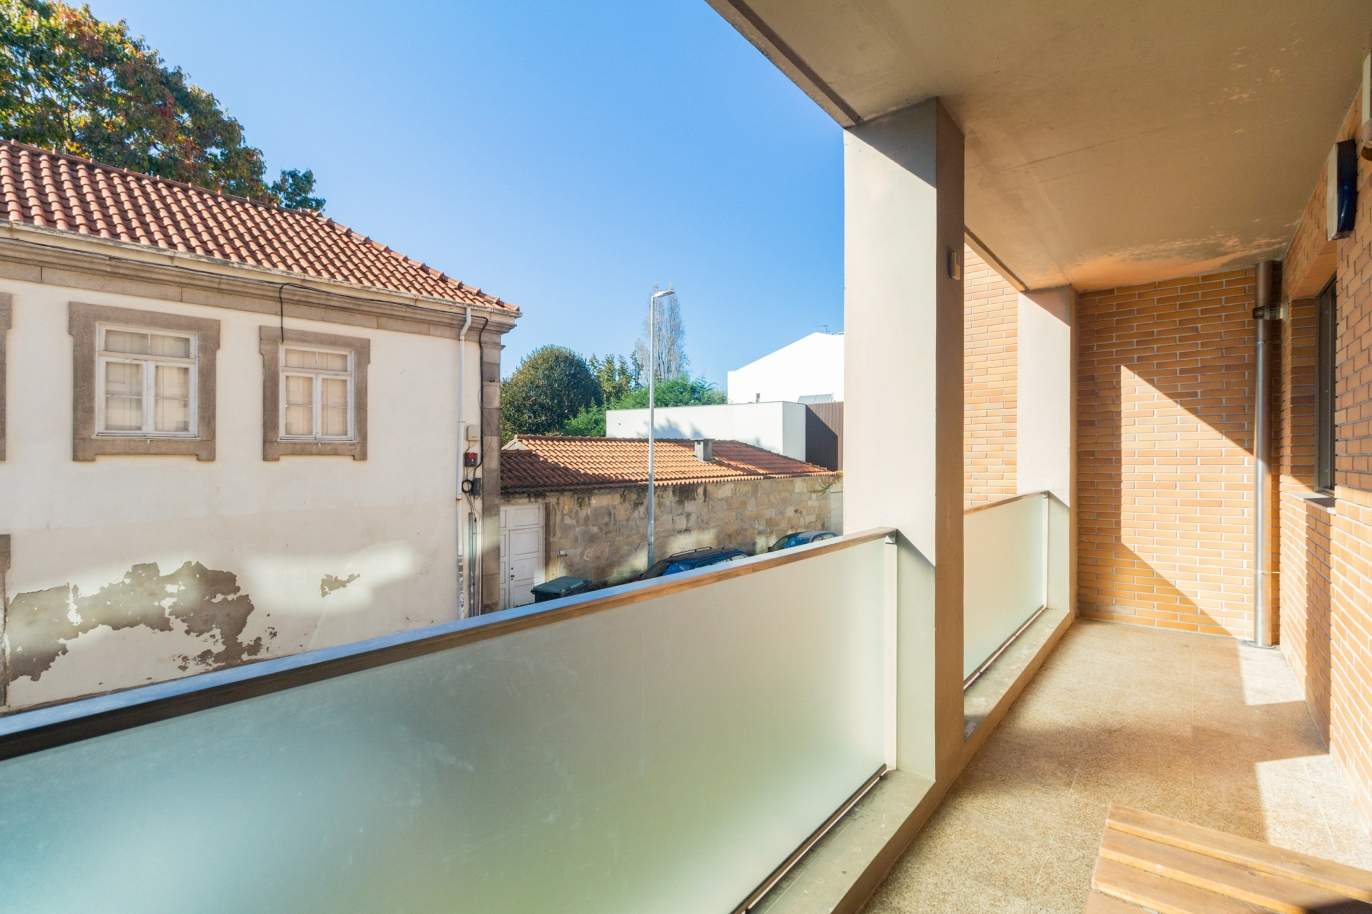 Apartment with balcony, for sale, in Ramalde, Porto, Portugal_184346